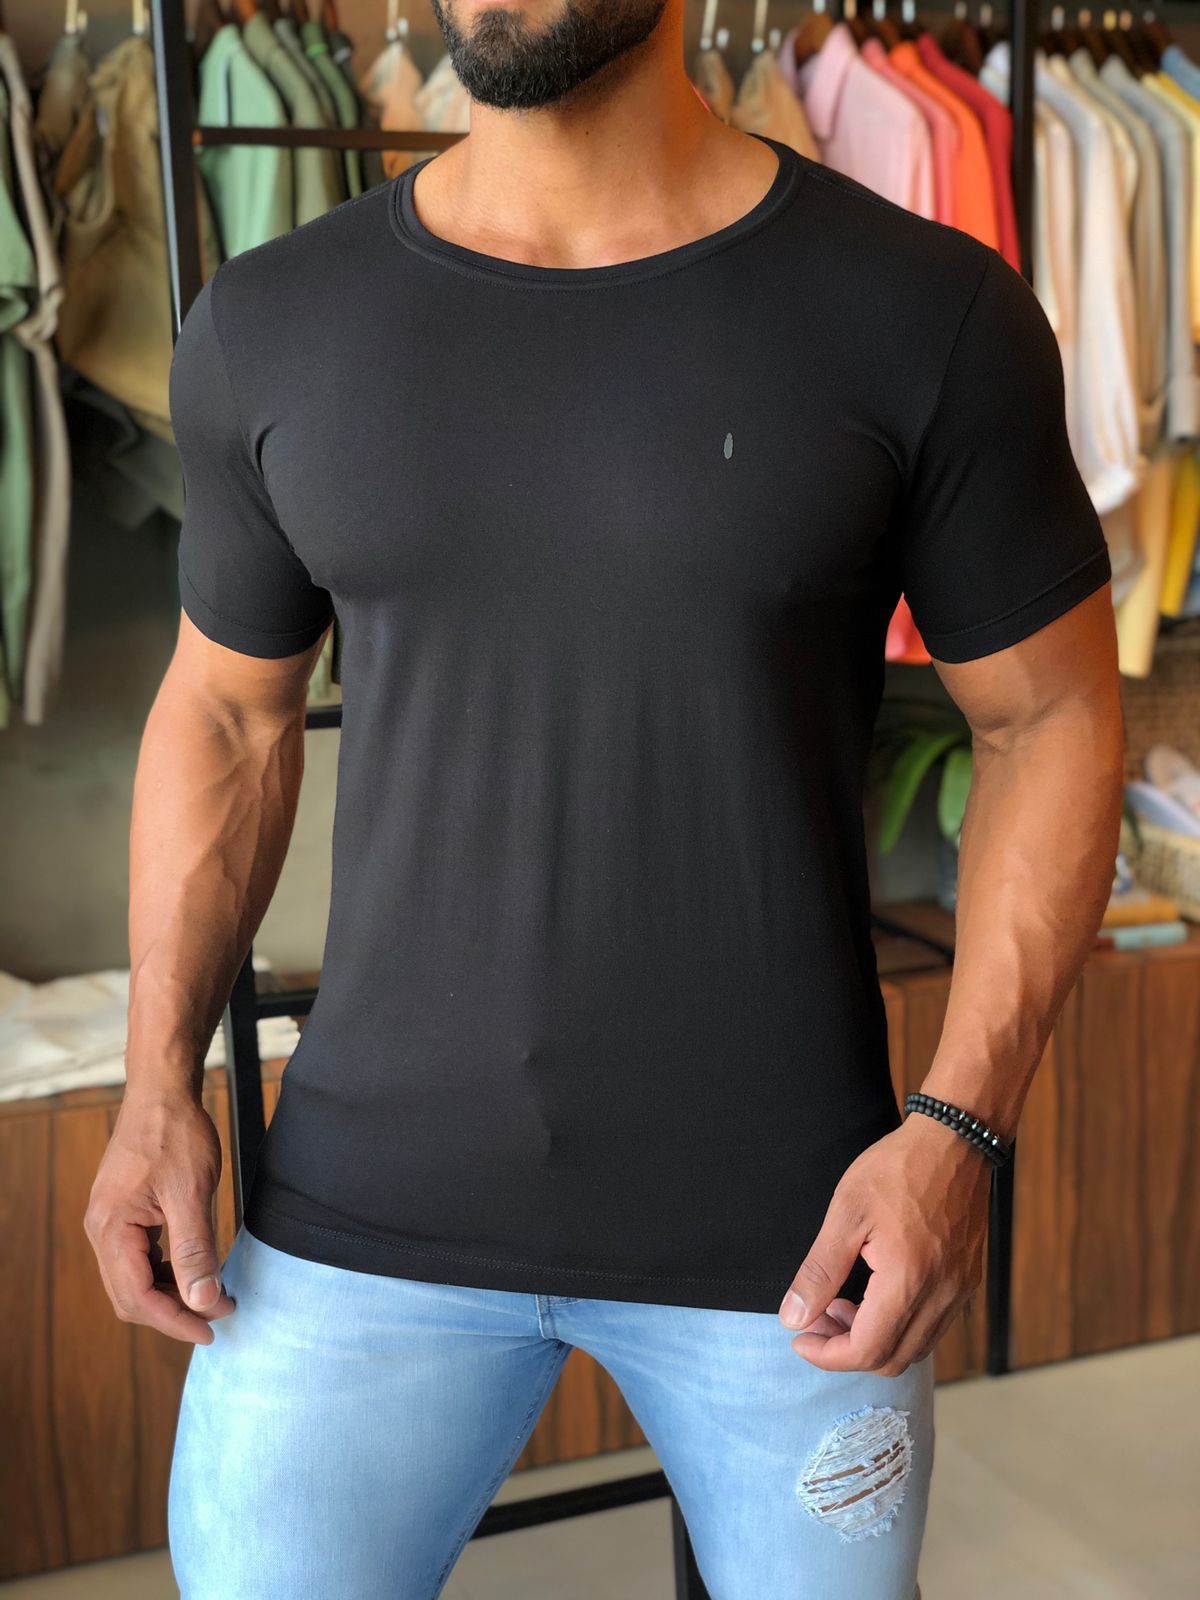 T shirt gola canoa masculina